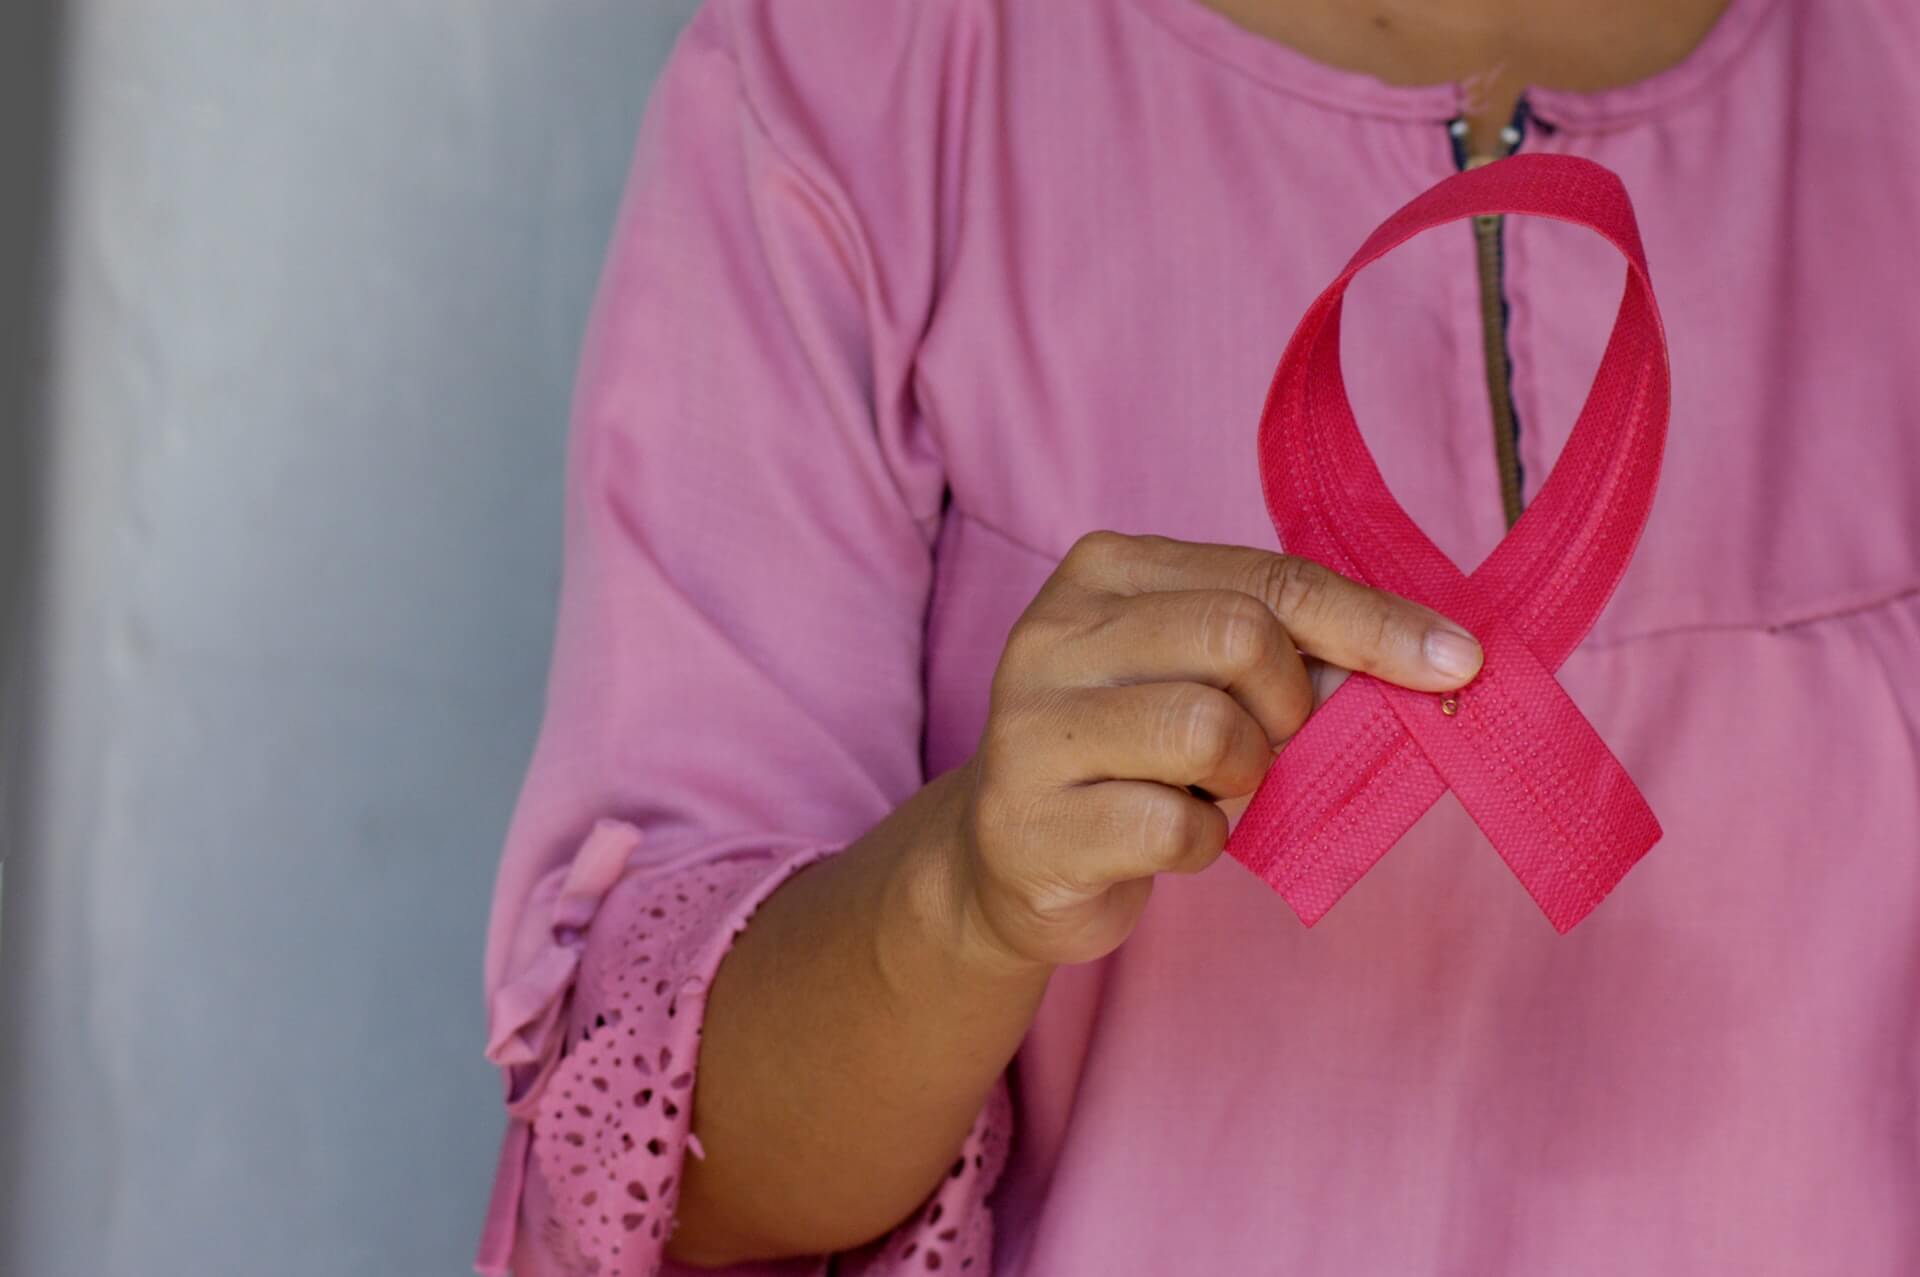 Breast cancer myths